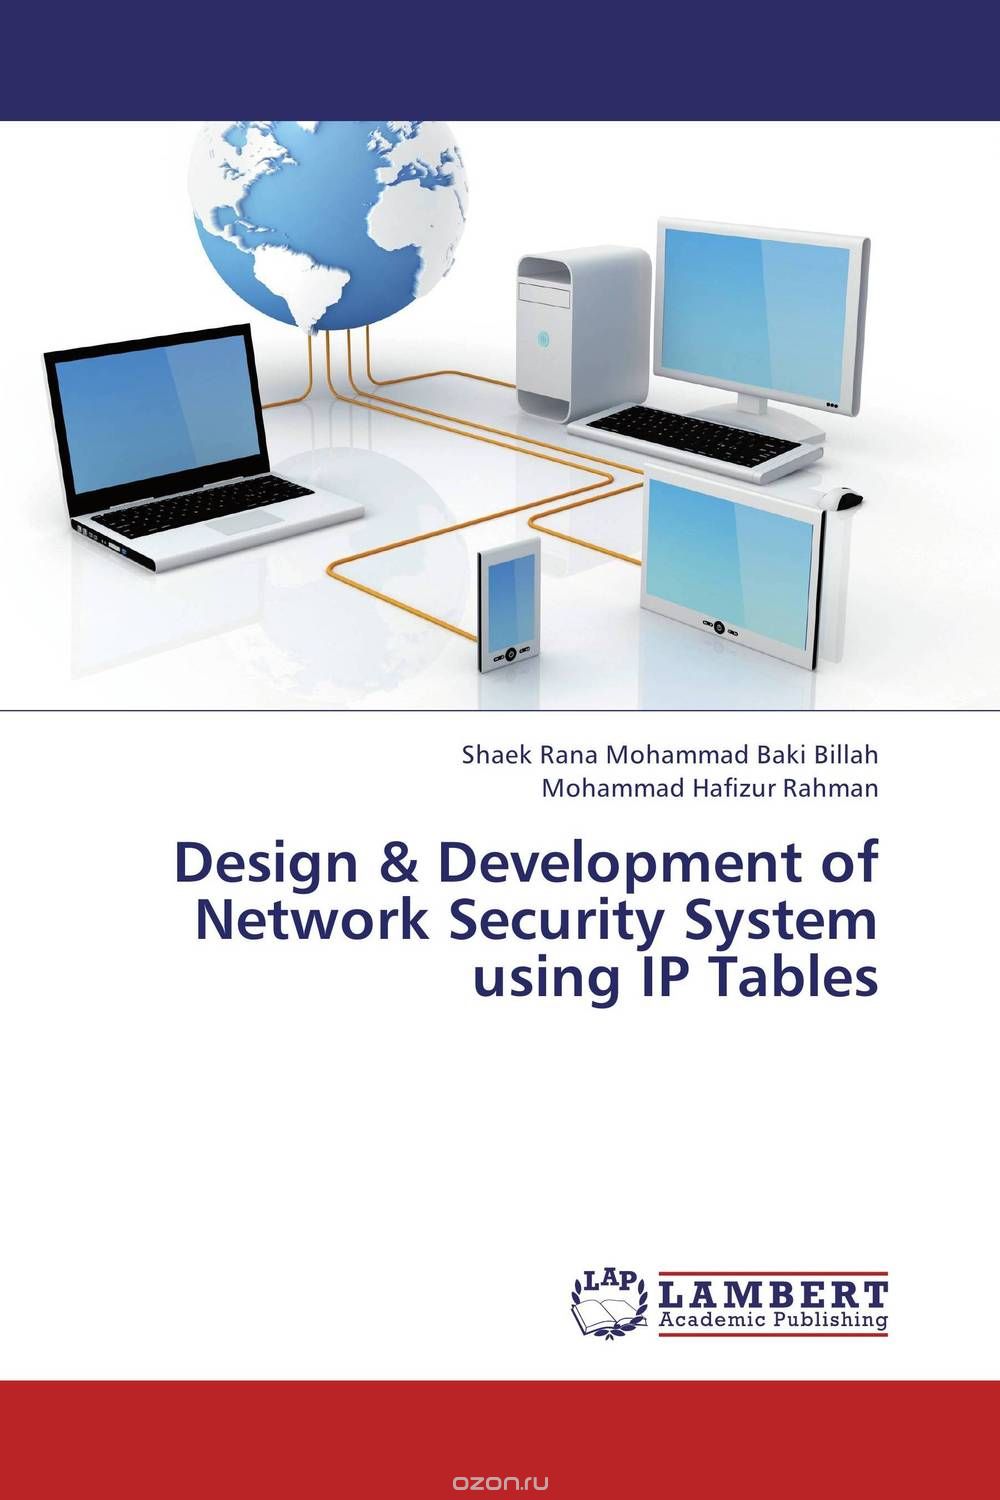 Скачать книгу "Design & Development of Network Security System using IP Tables"